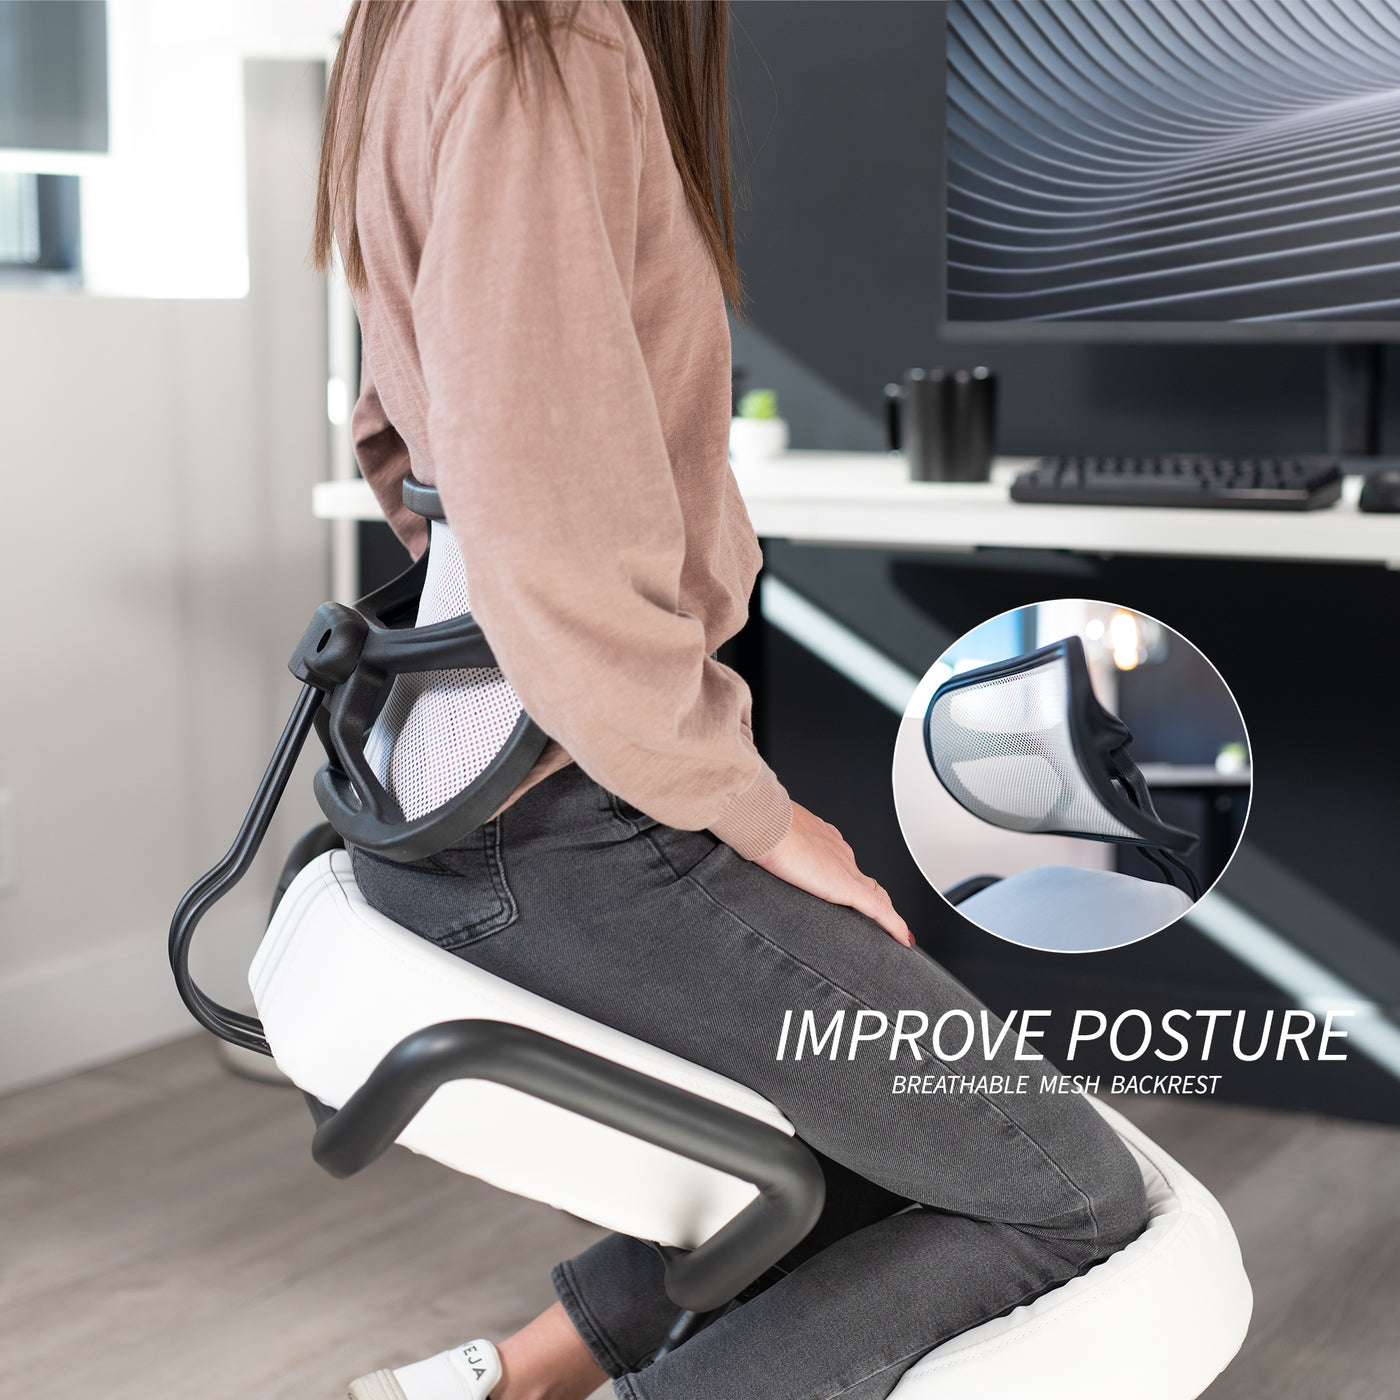 Adjustable Ergonomic Kneeling Chair with Back Support —